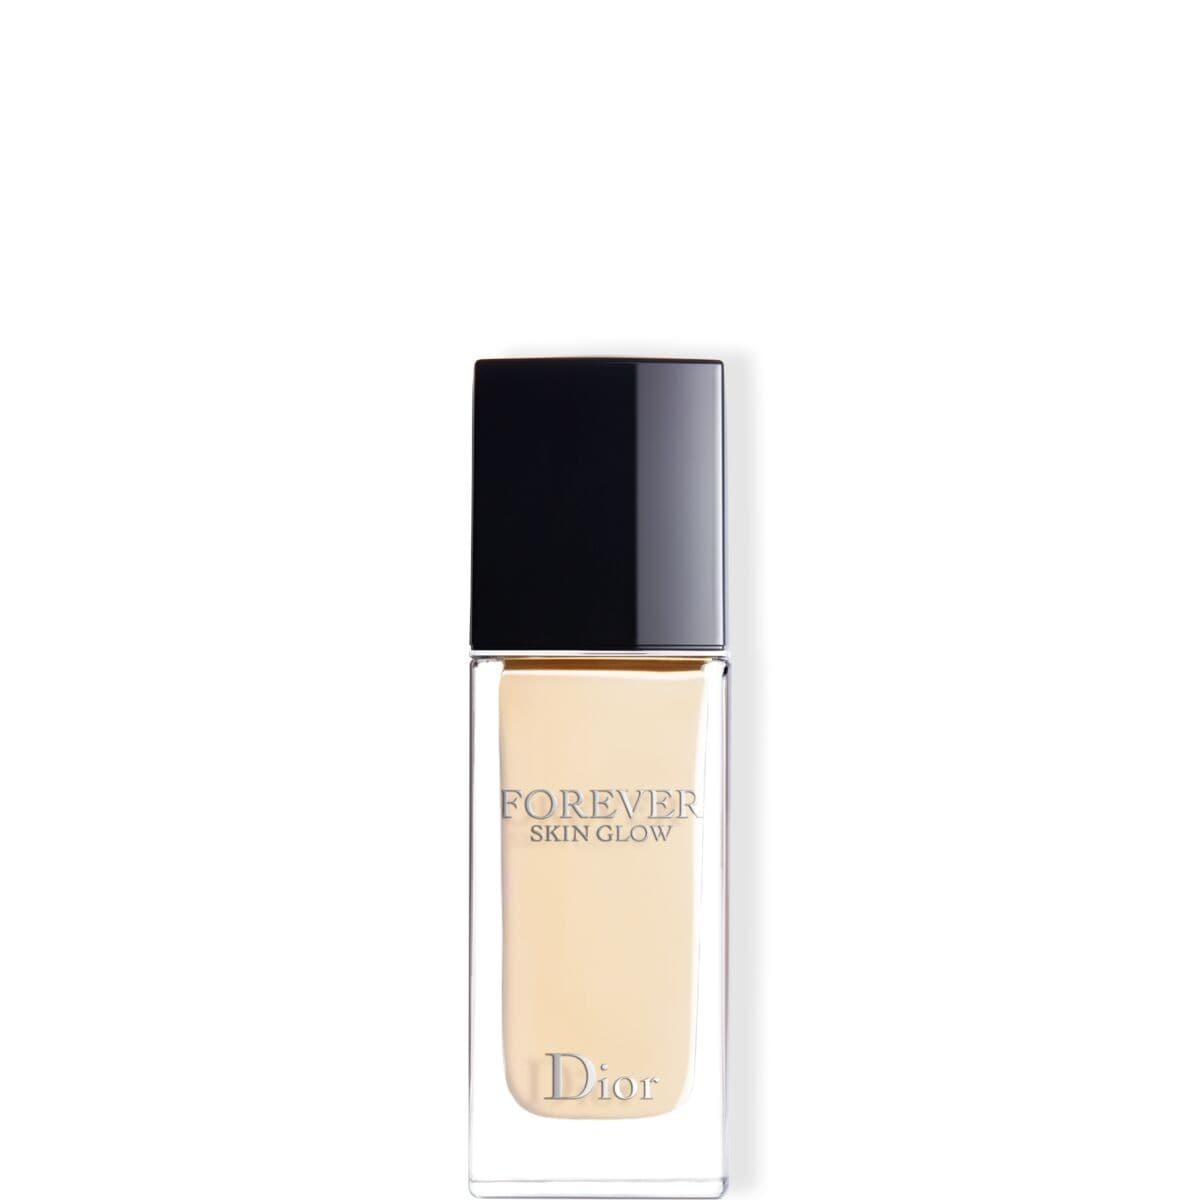 Dior Forever Skin Glow Foundation, No. 0n - Neutral